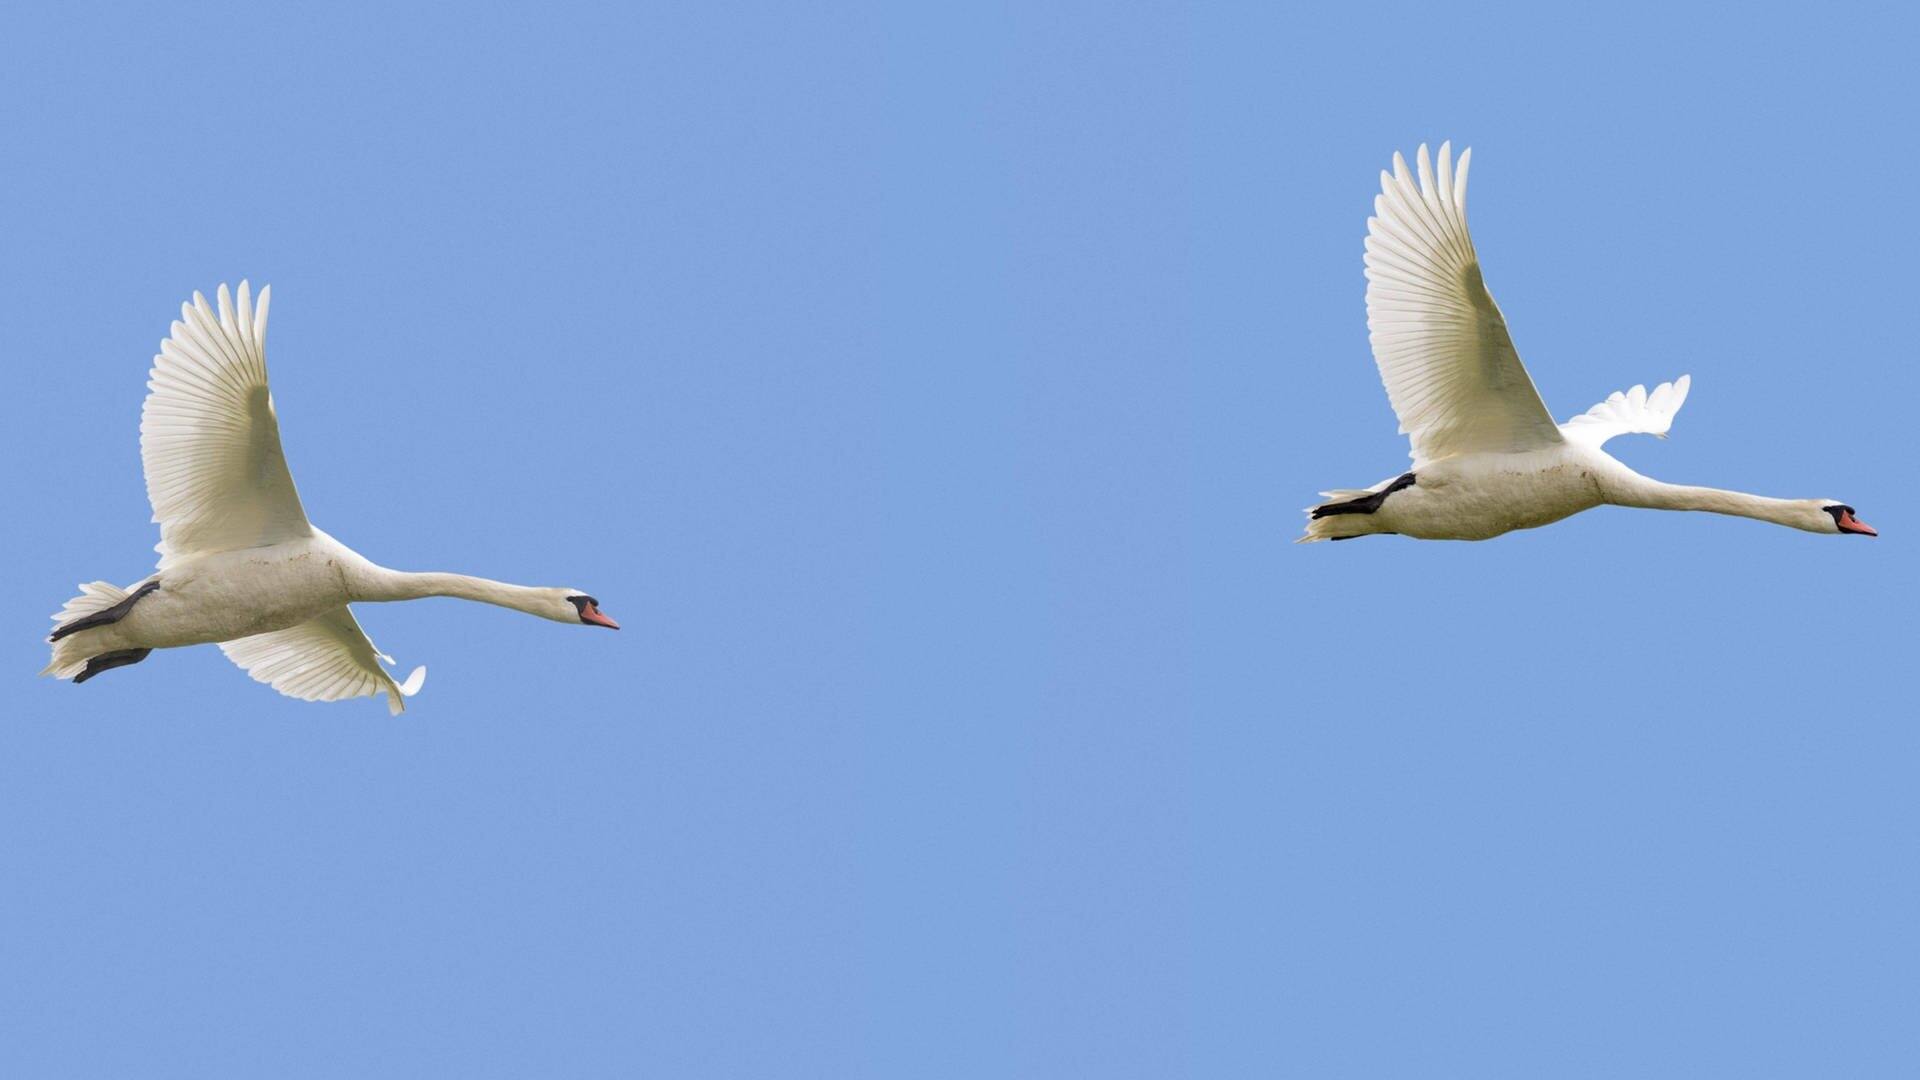 Zwei Höckerschwäne (Cygnus olor) im Flug vor blauem Himmel. (Foto: IMAGO, imageBROKER/alimdi/Arterra)